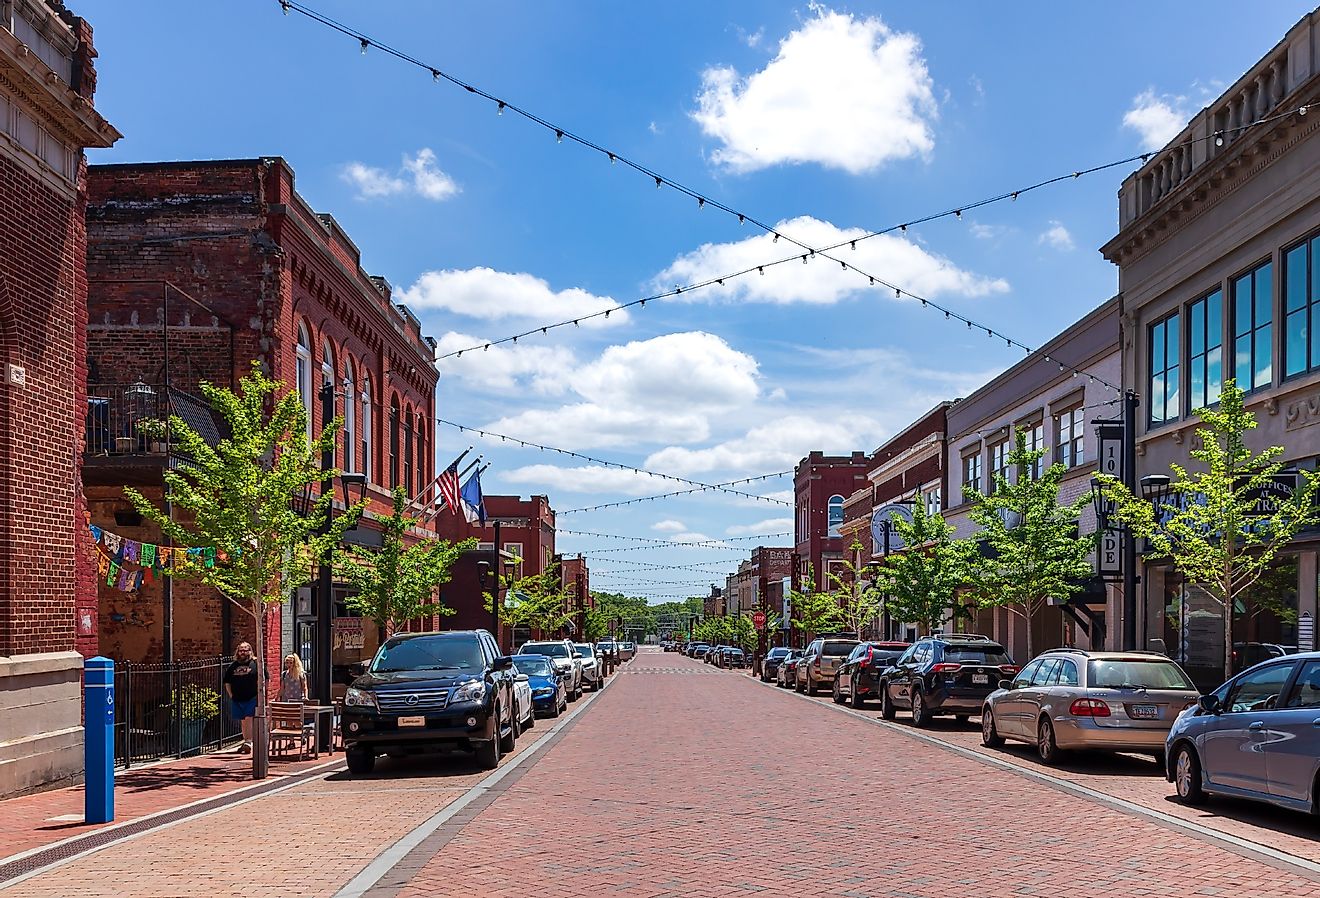 Downtown street in Greer, South Carolina. Image credit Nolichuckyjake via Shutterstock